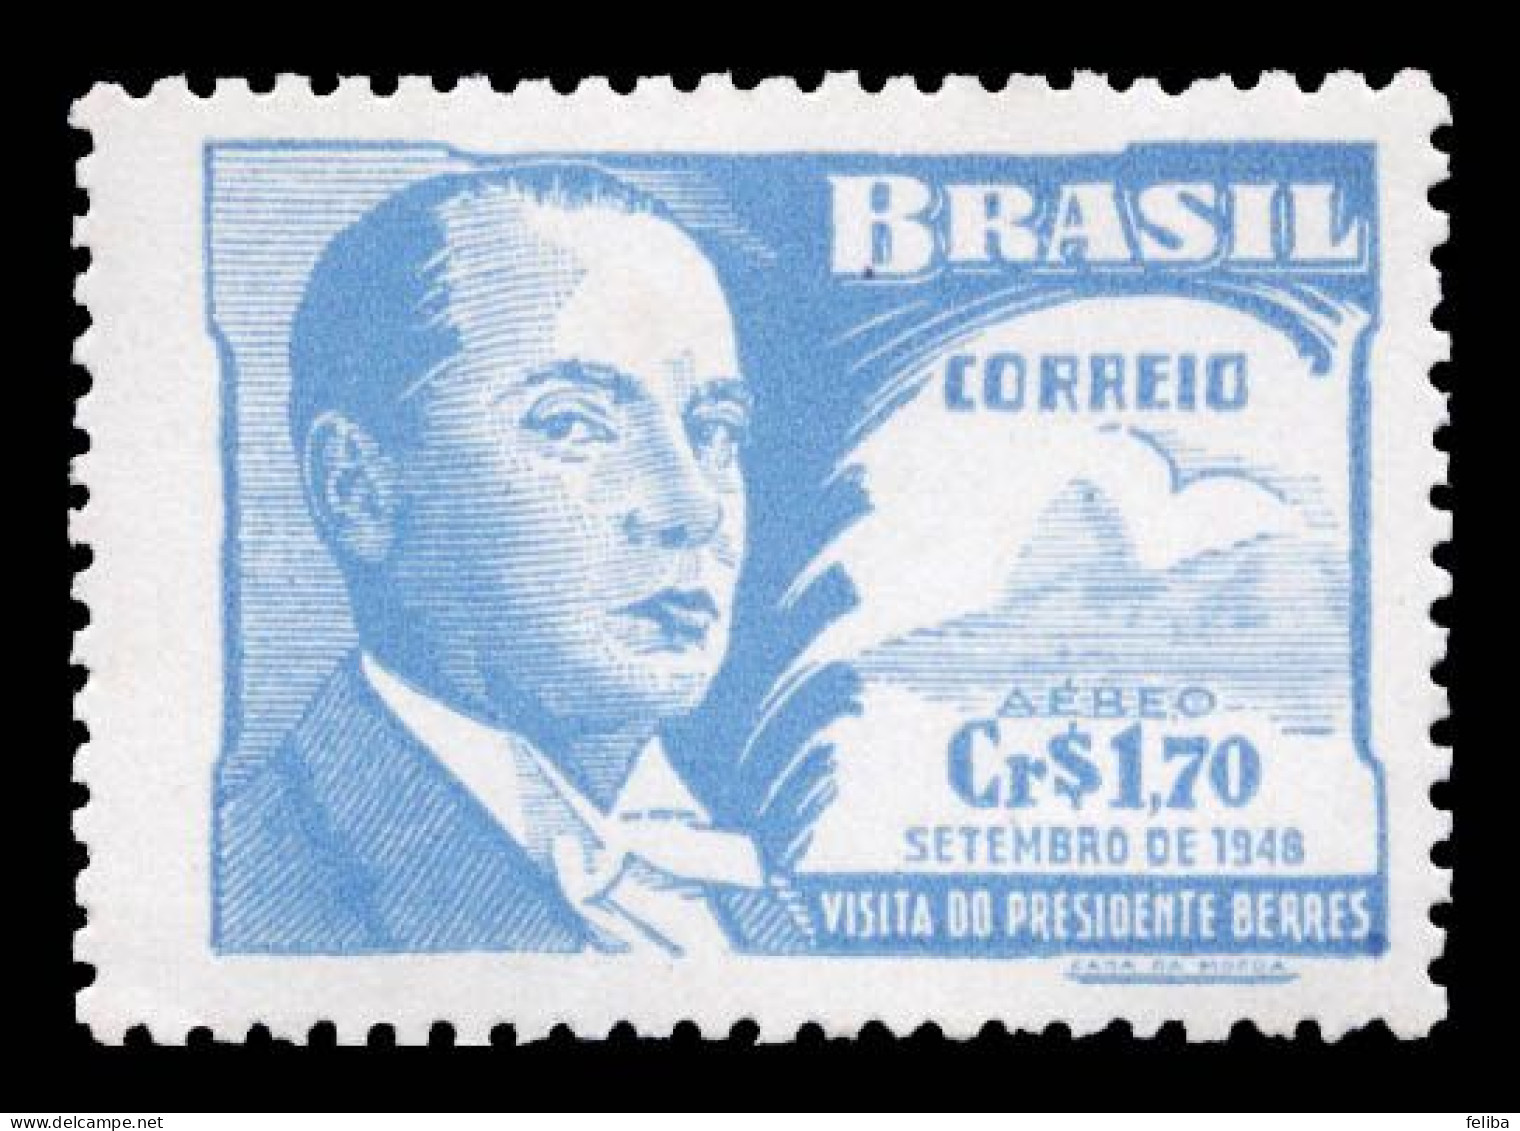 Brazil 1948 Airmail Unused - Luftpost